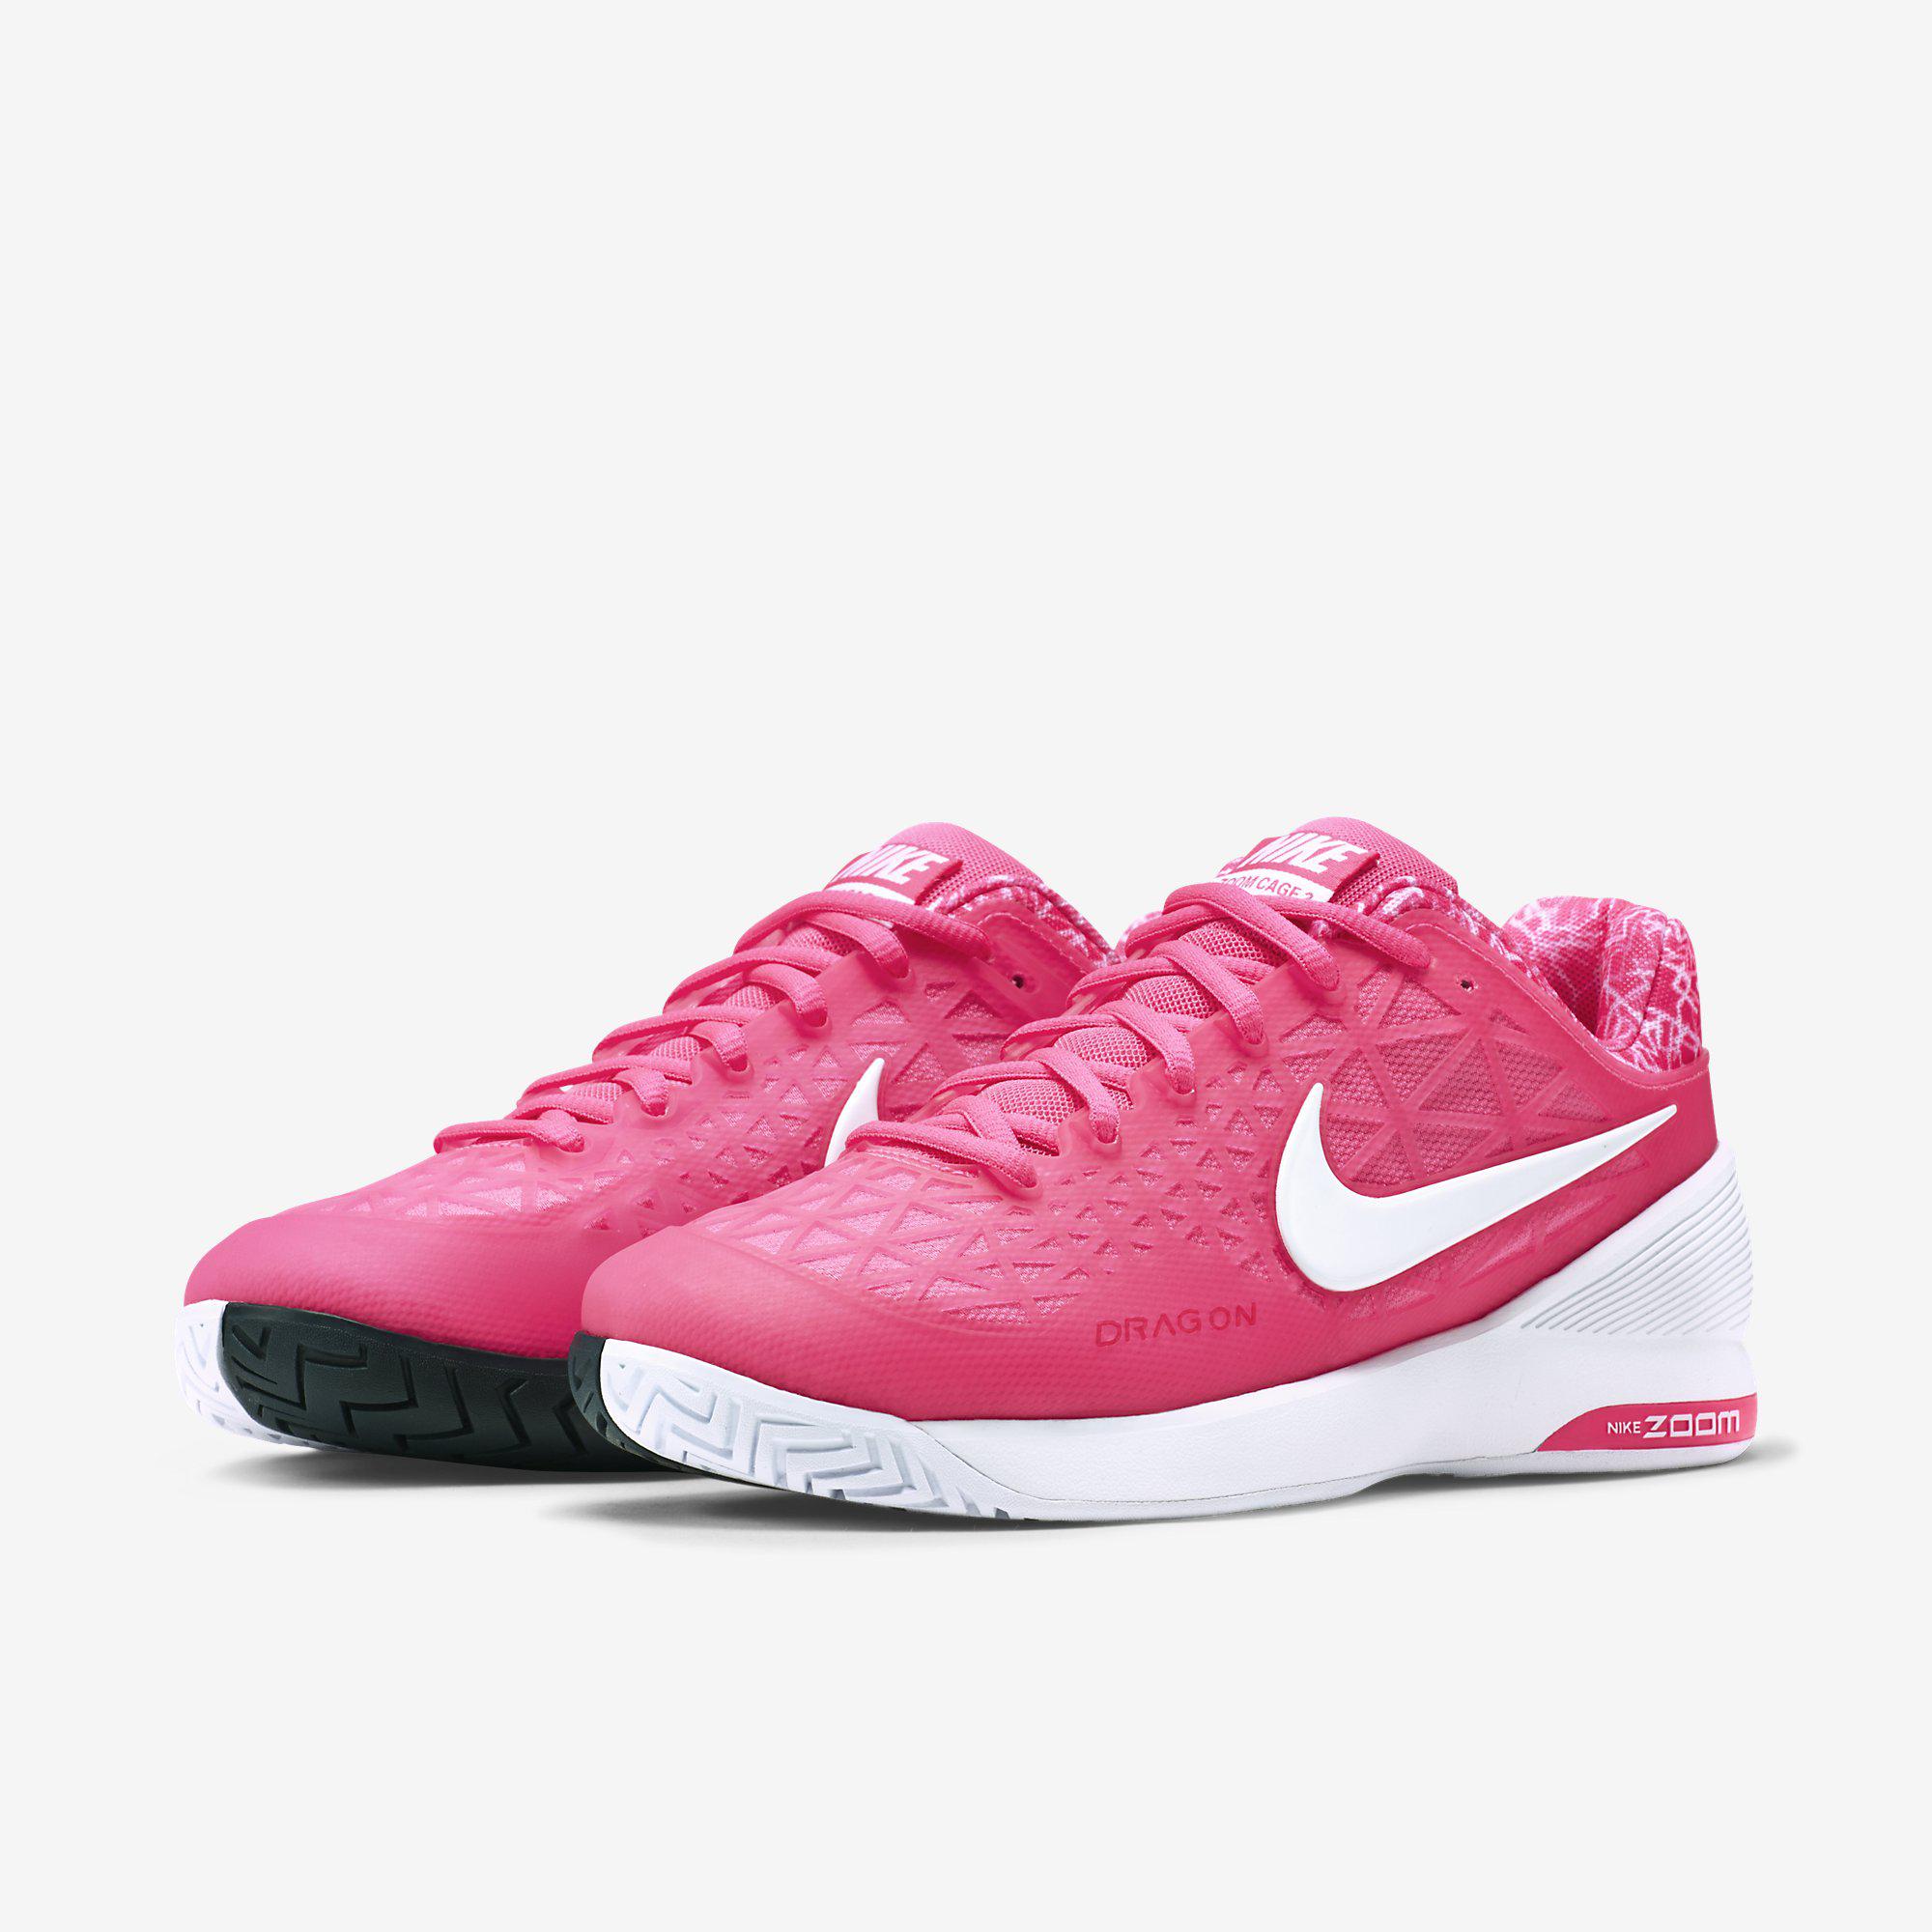 Nike Womens Zoom Cage 2 Tennis Shoes - Pink/White - Tennisnuts.com